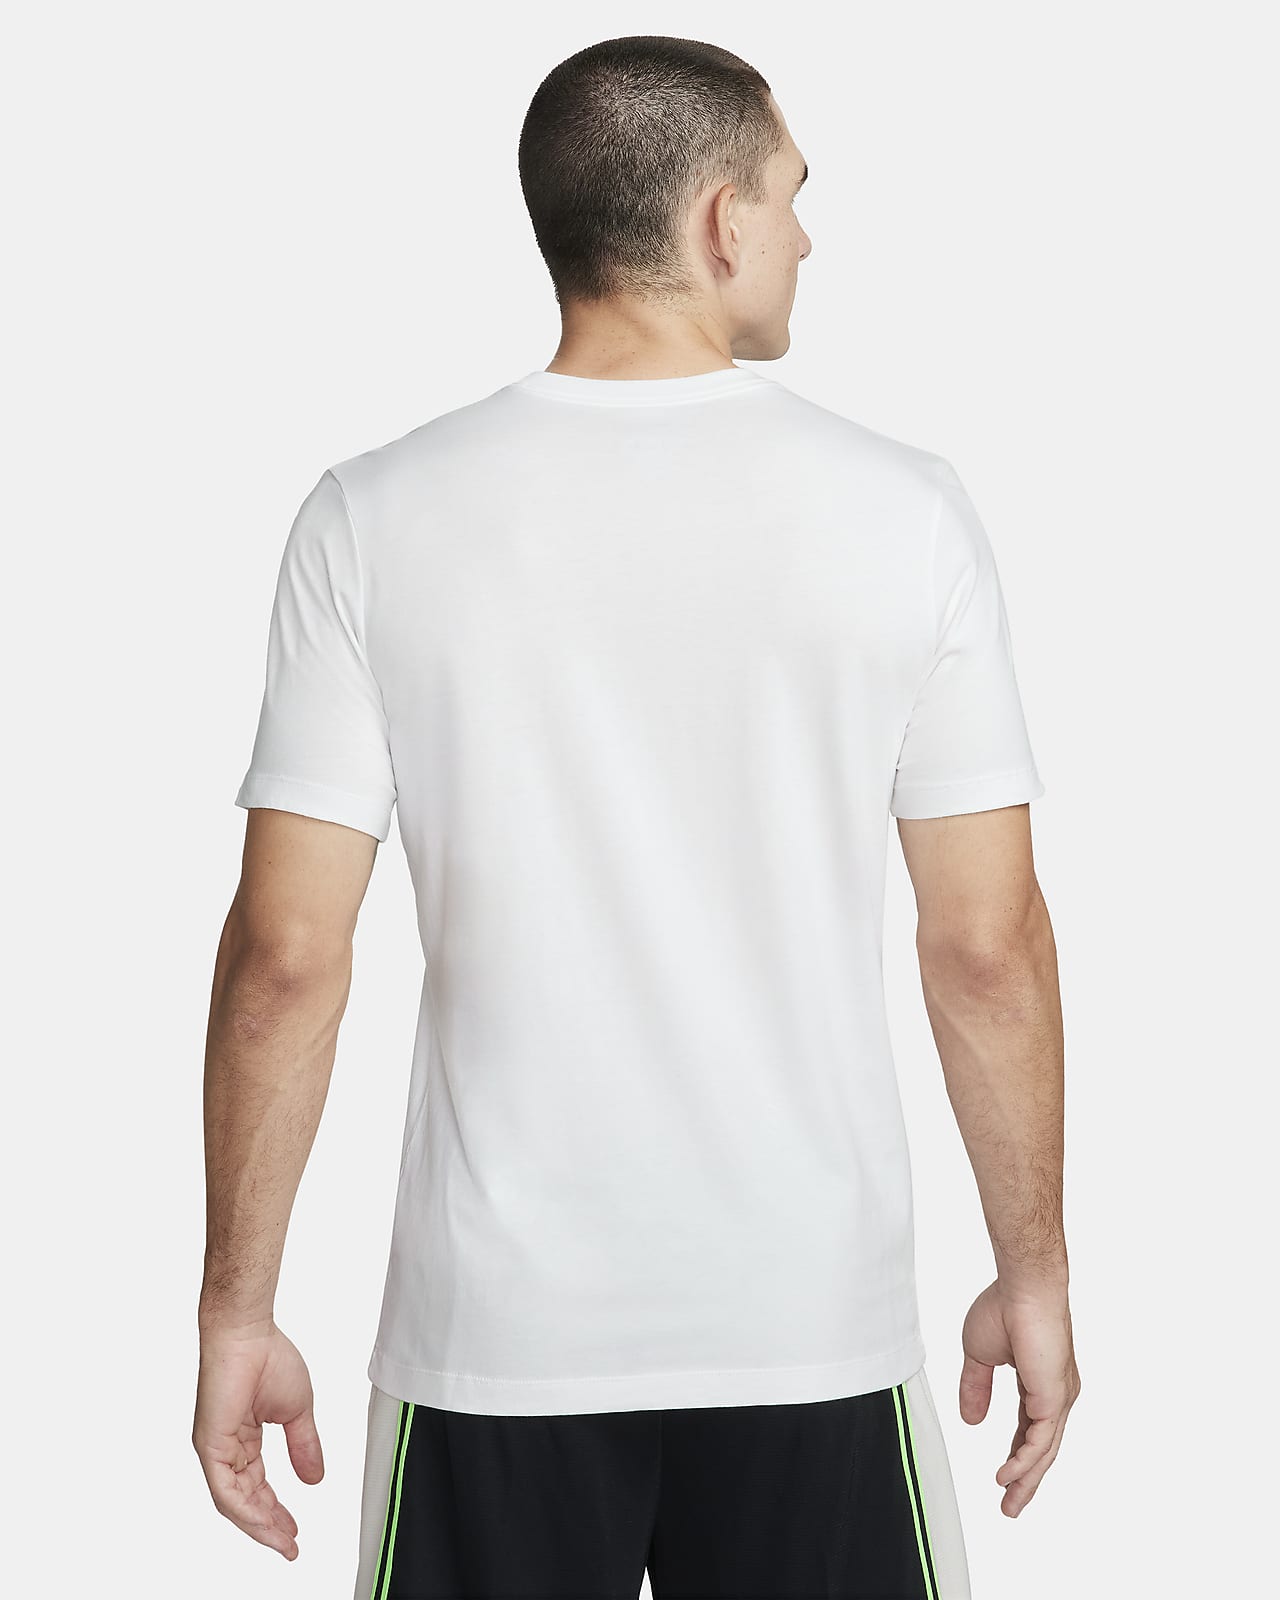 Men's Nike T-Shirt White Court Swoosh Logo Top New S-XXL DQ3944